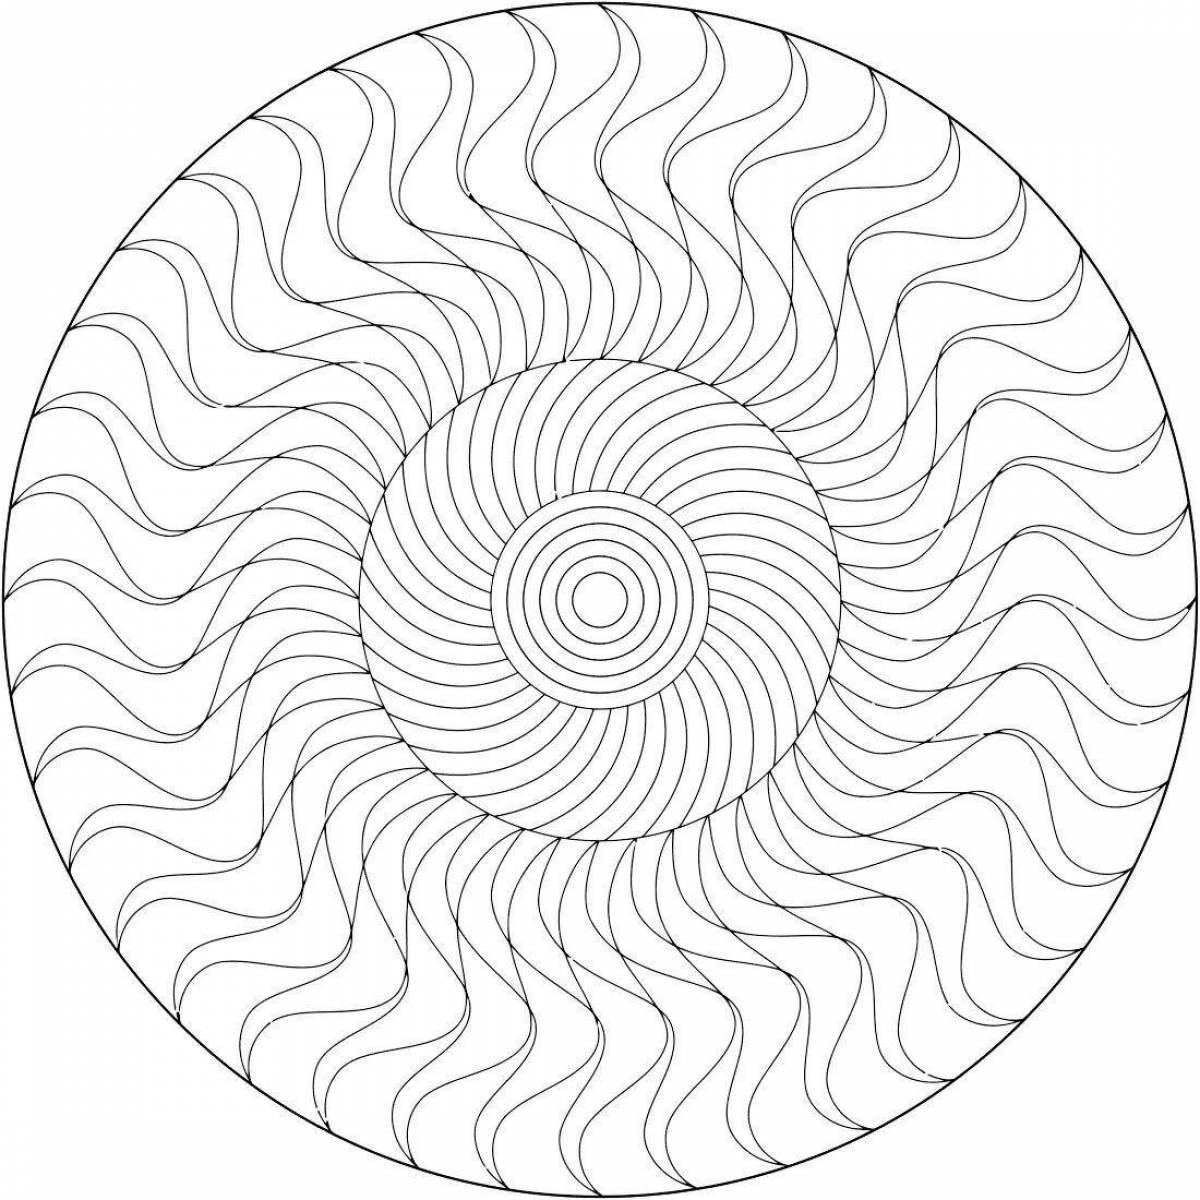 Adorable circular pattern coloring page